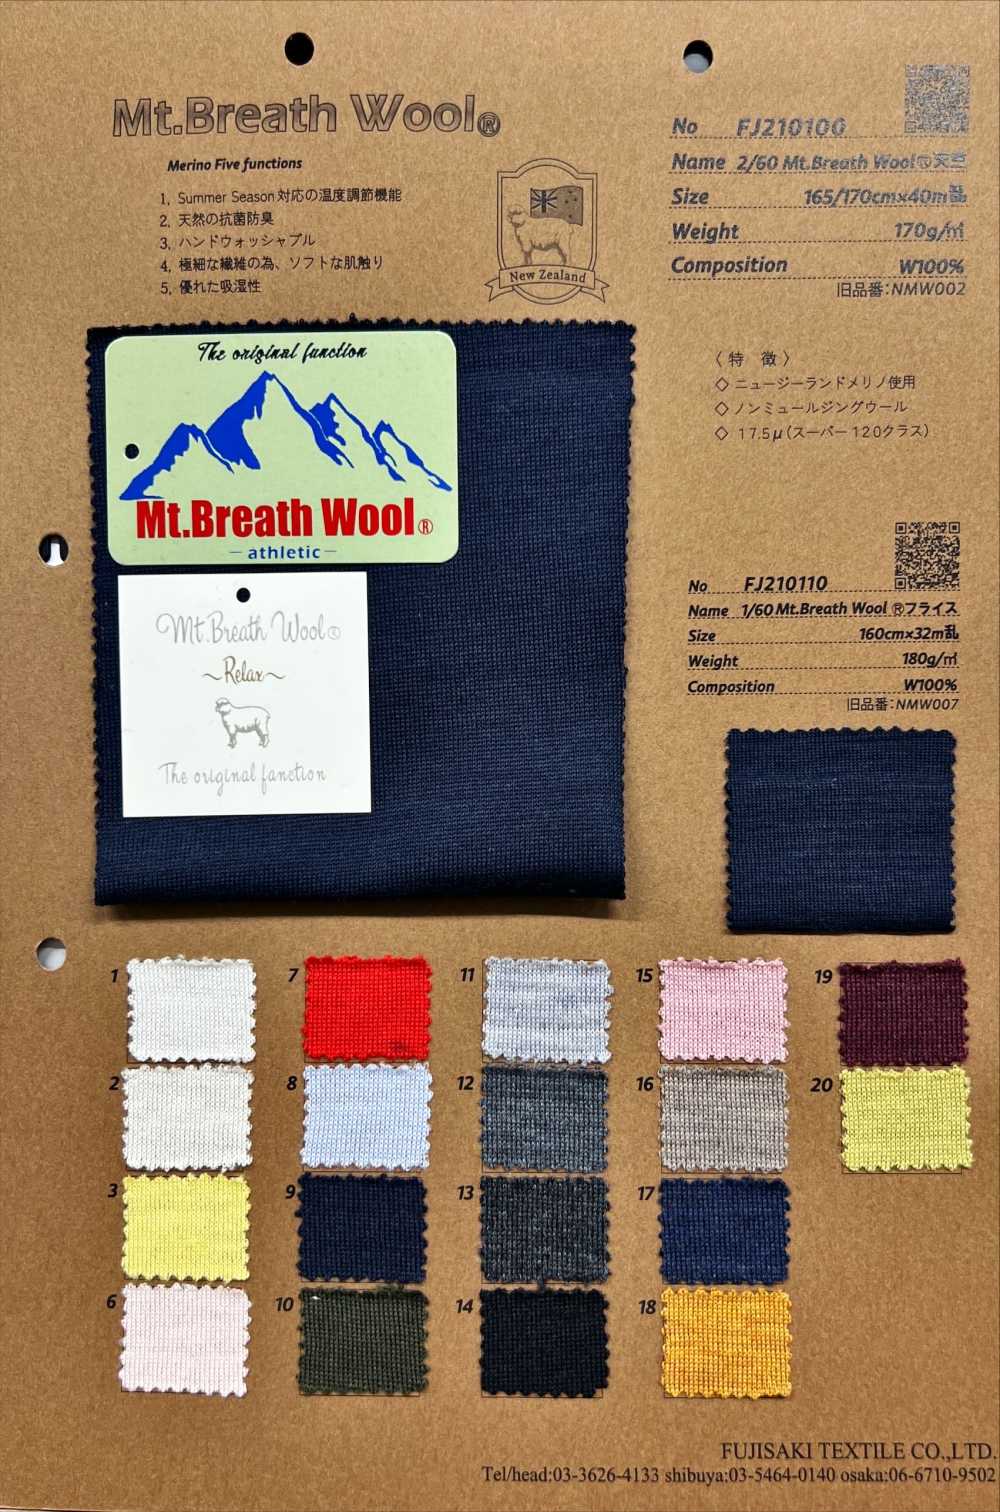 FJ210100 2/60 Mt.Breath 羊毛針織豚平針織物[面料] Fujisaki Textile